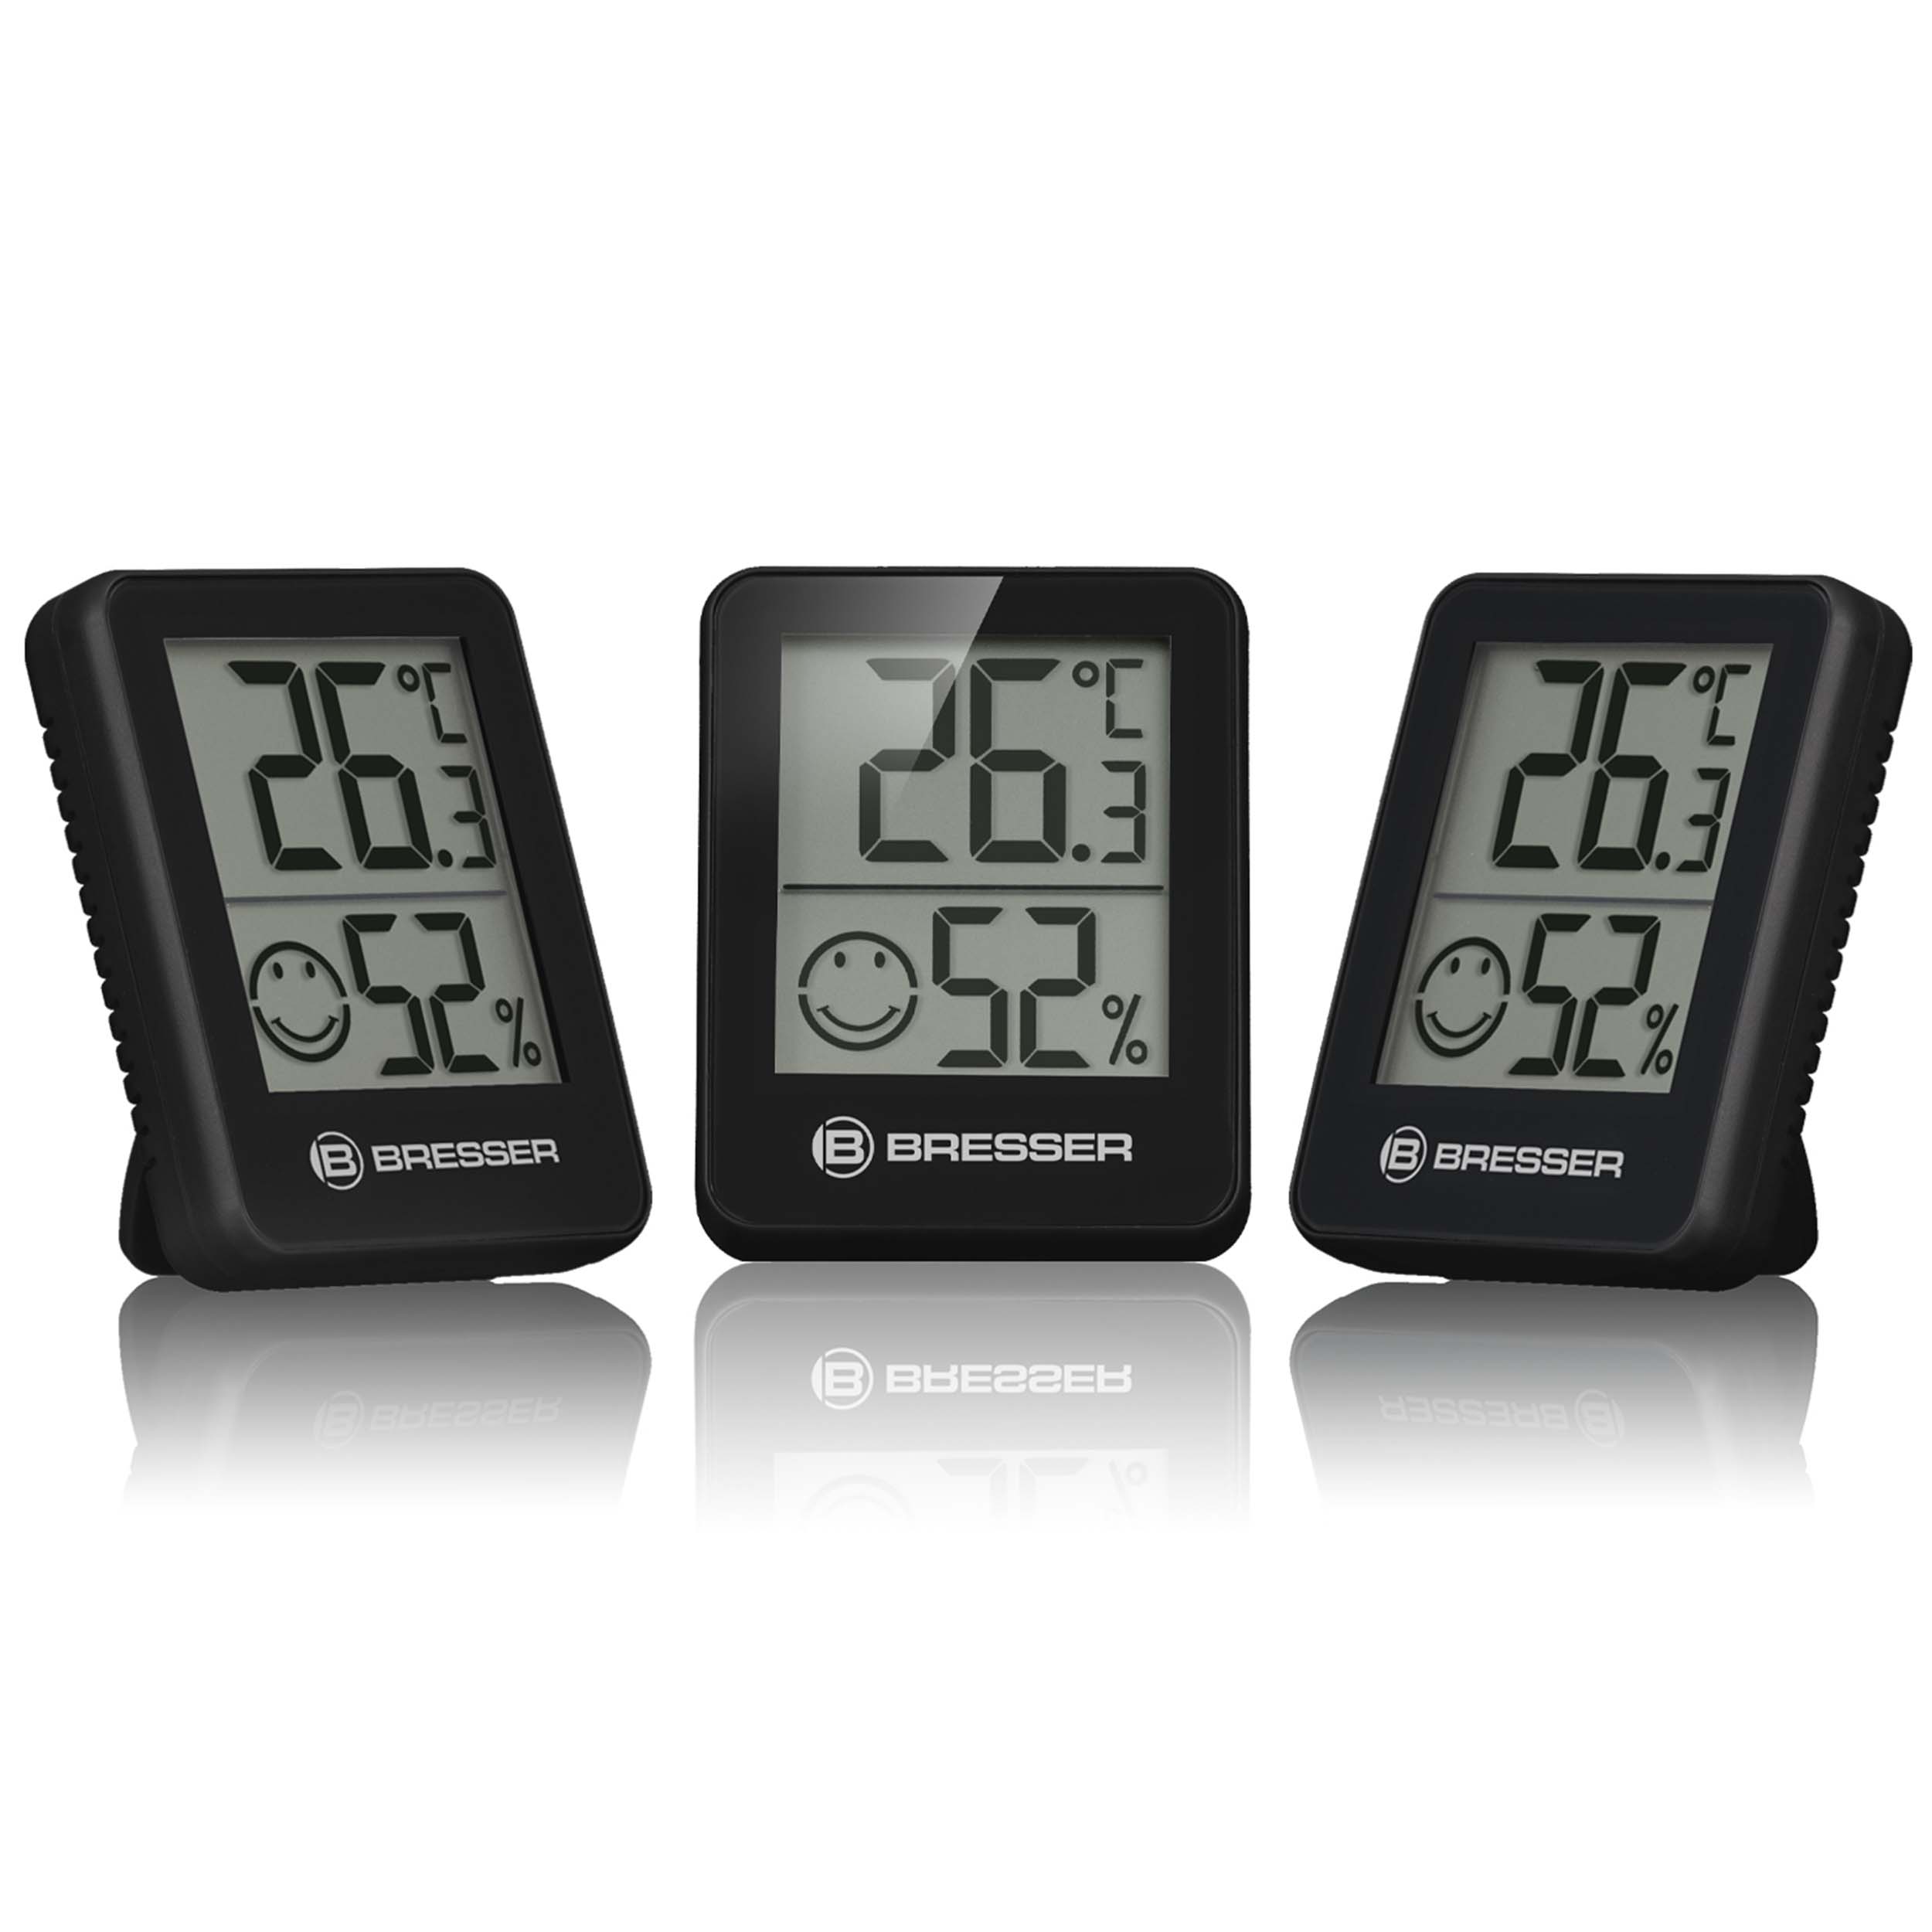 BRESSER ClimaTemp Thermo Hygrometer Indicator 3 unit set